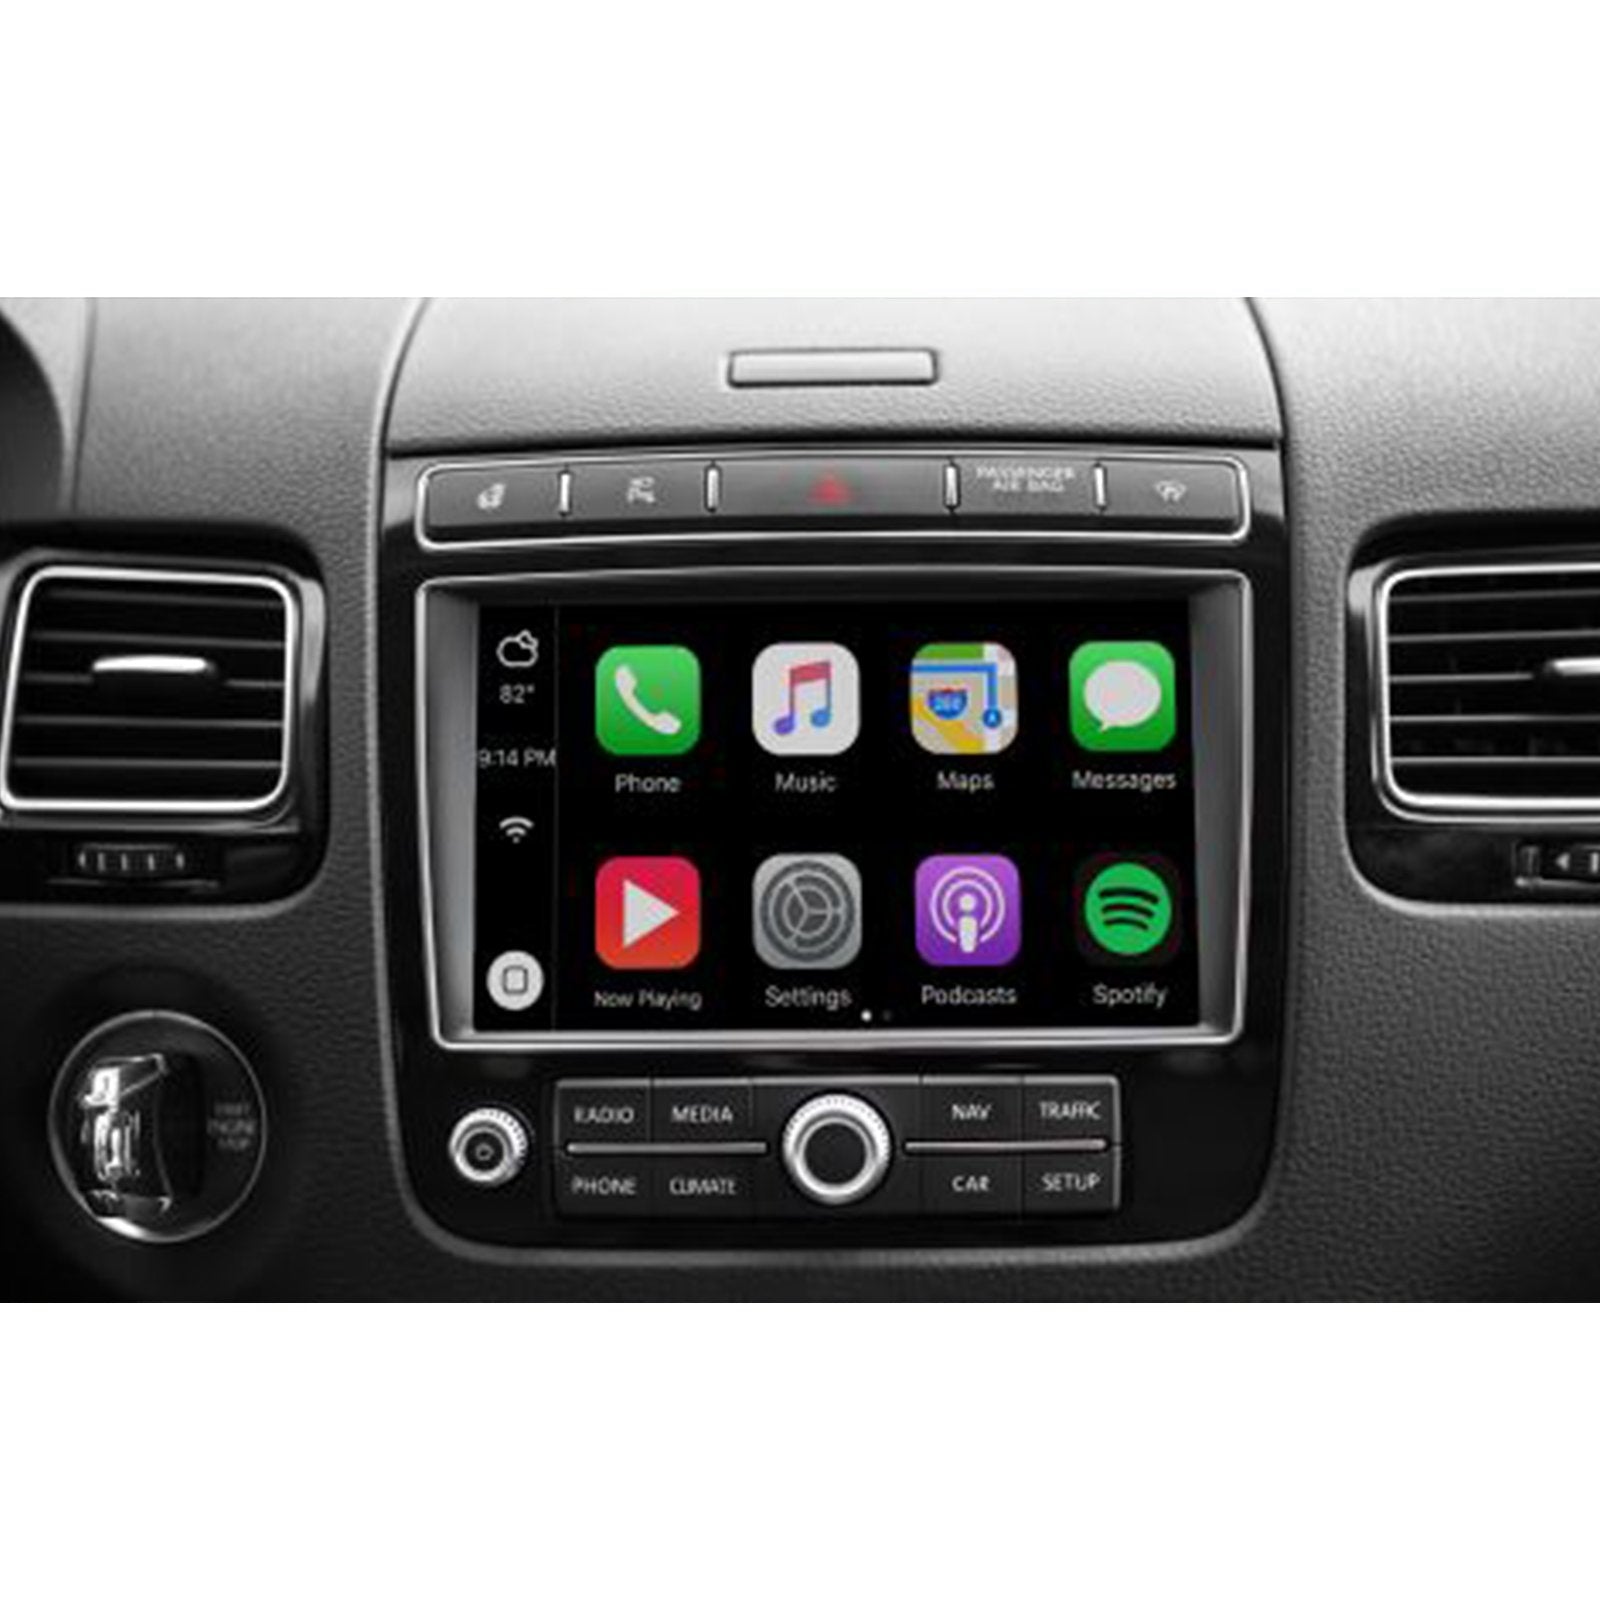 Apple Carplay for Volkswagen Touareg –